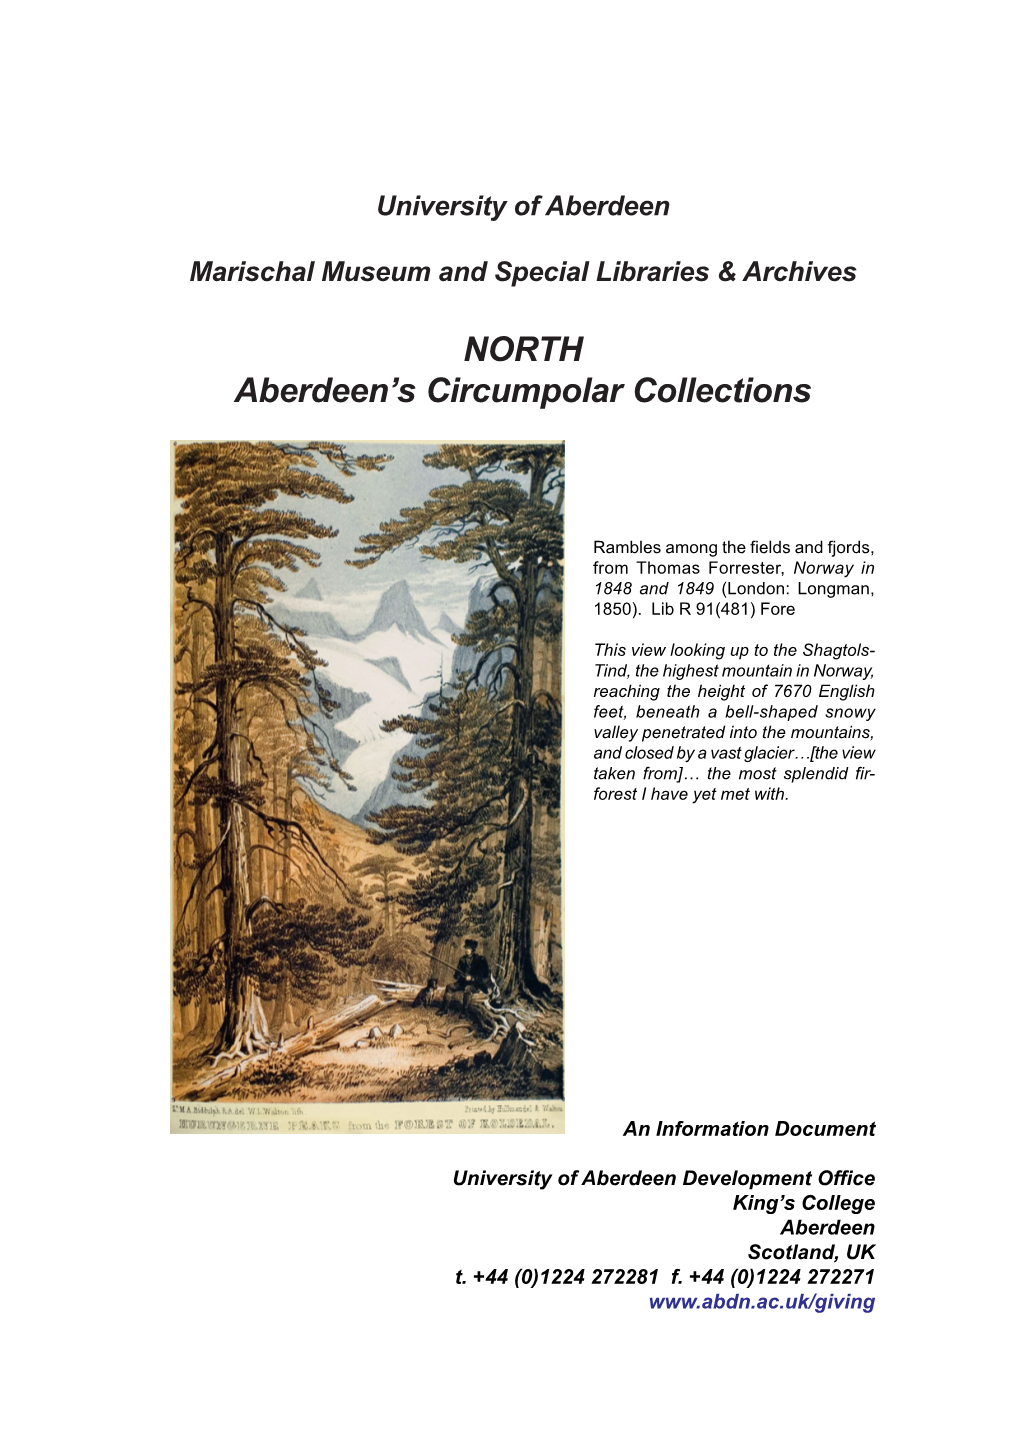 NORTH Aberdeen’S Circumpolar Collections